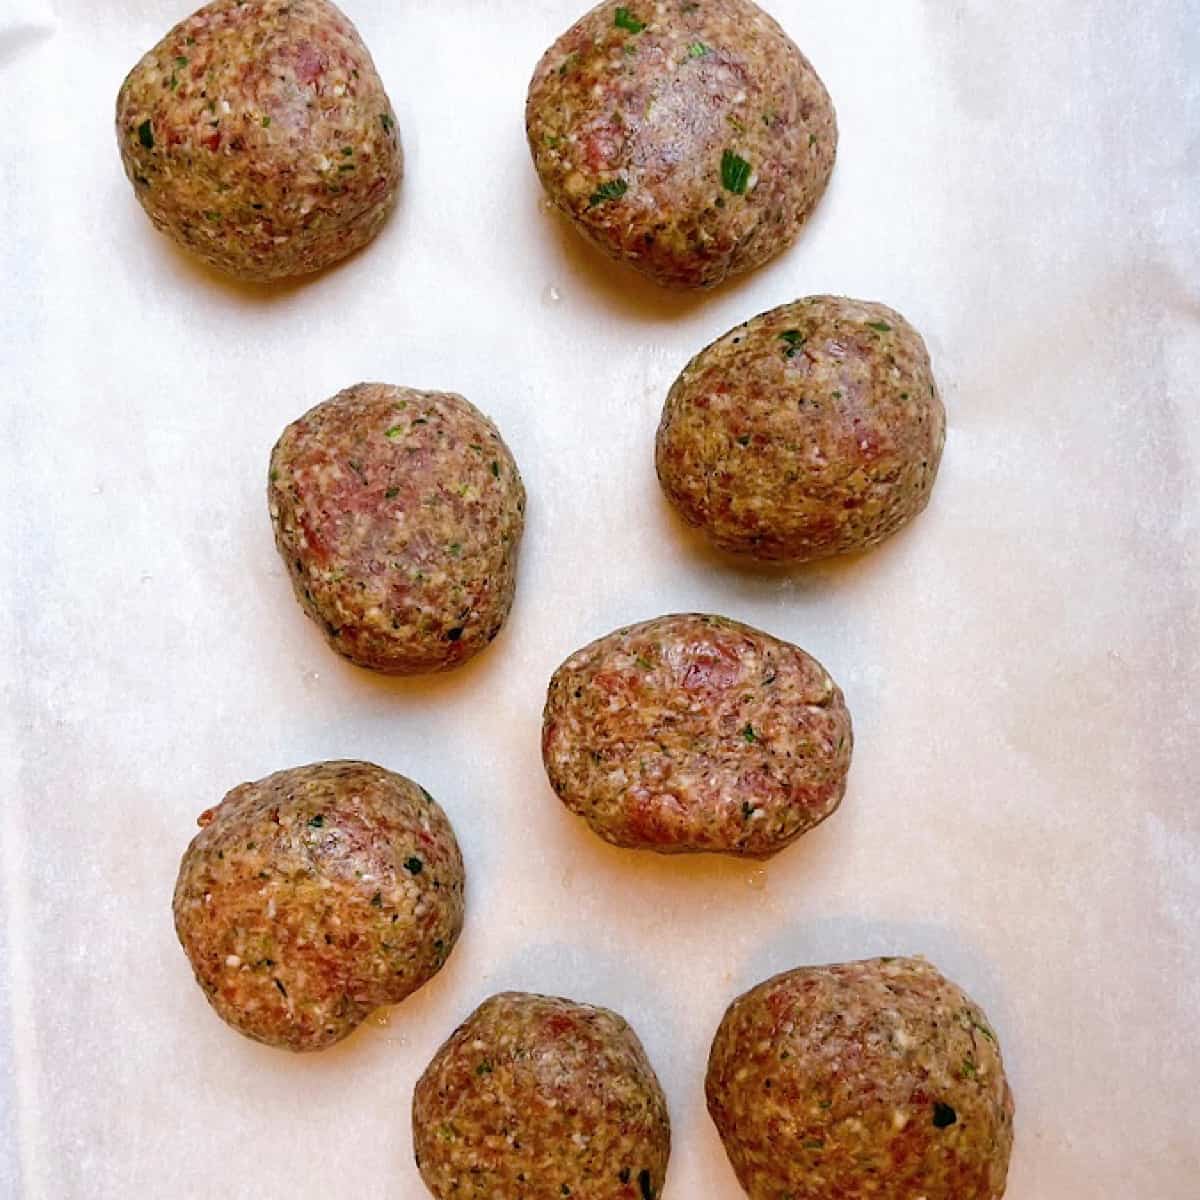 8 meatballs